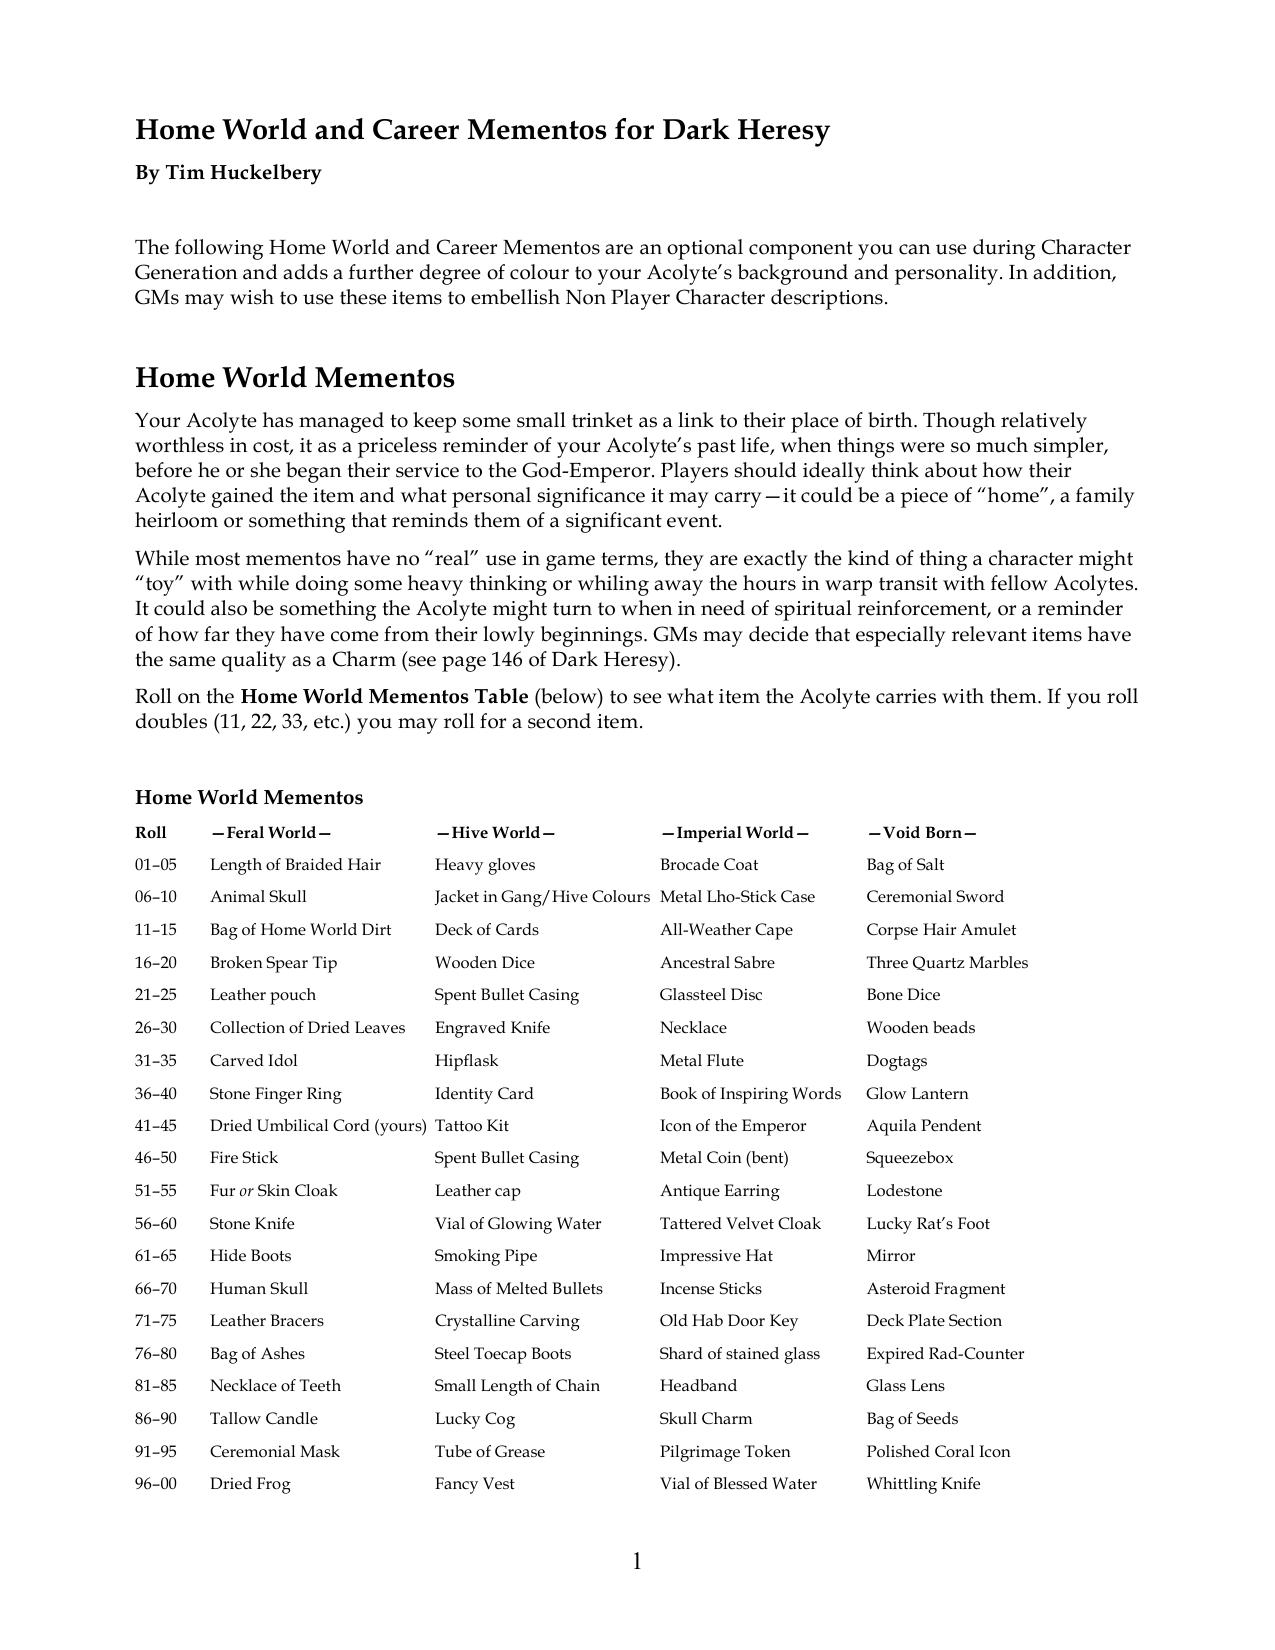 Microsoft Word - Home World & Career Mementos_Tim Huckelbery_FINAL.doc